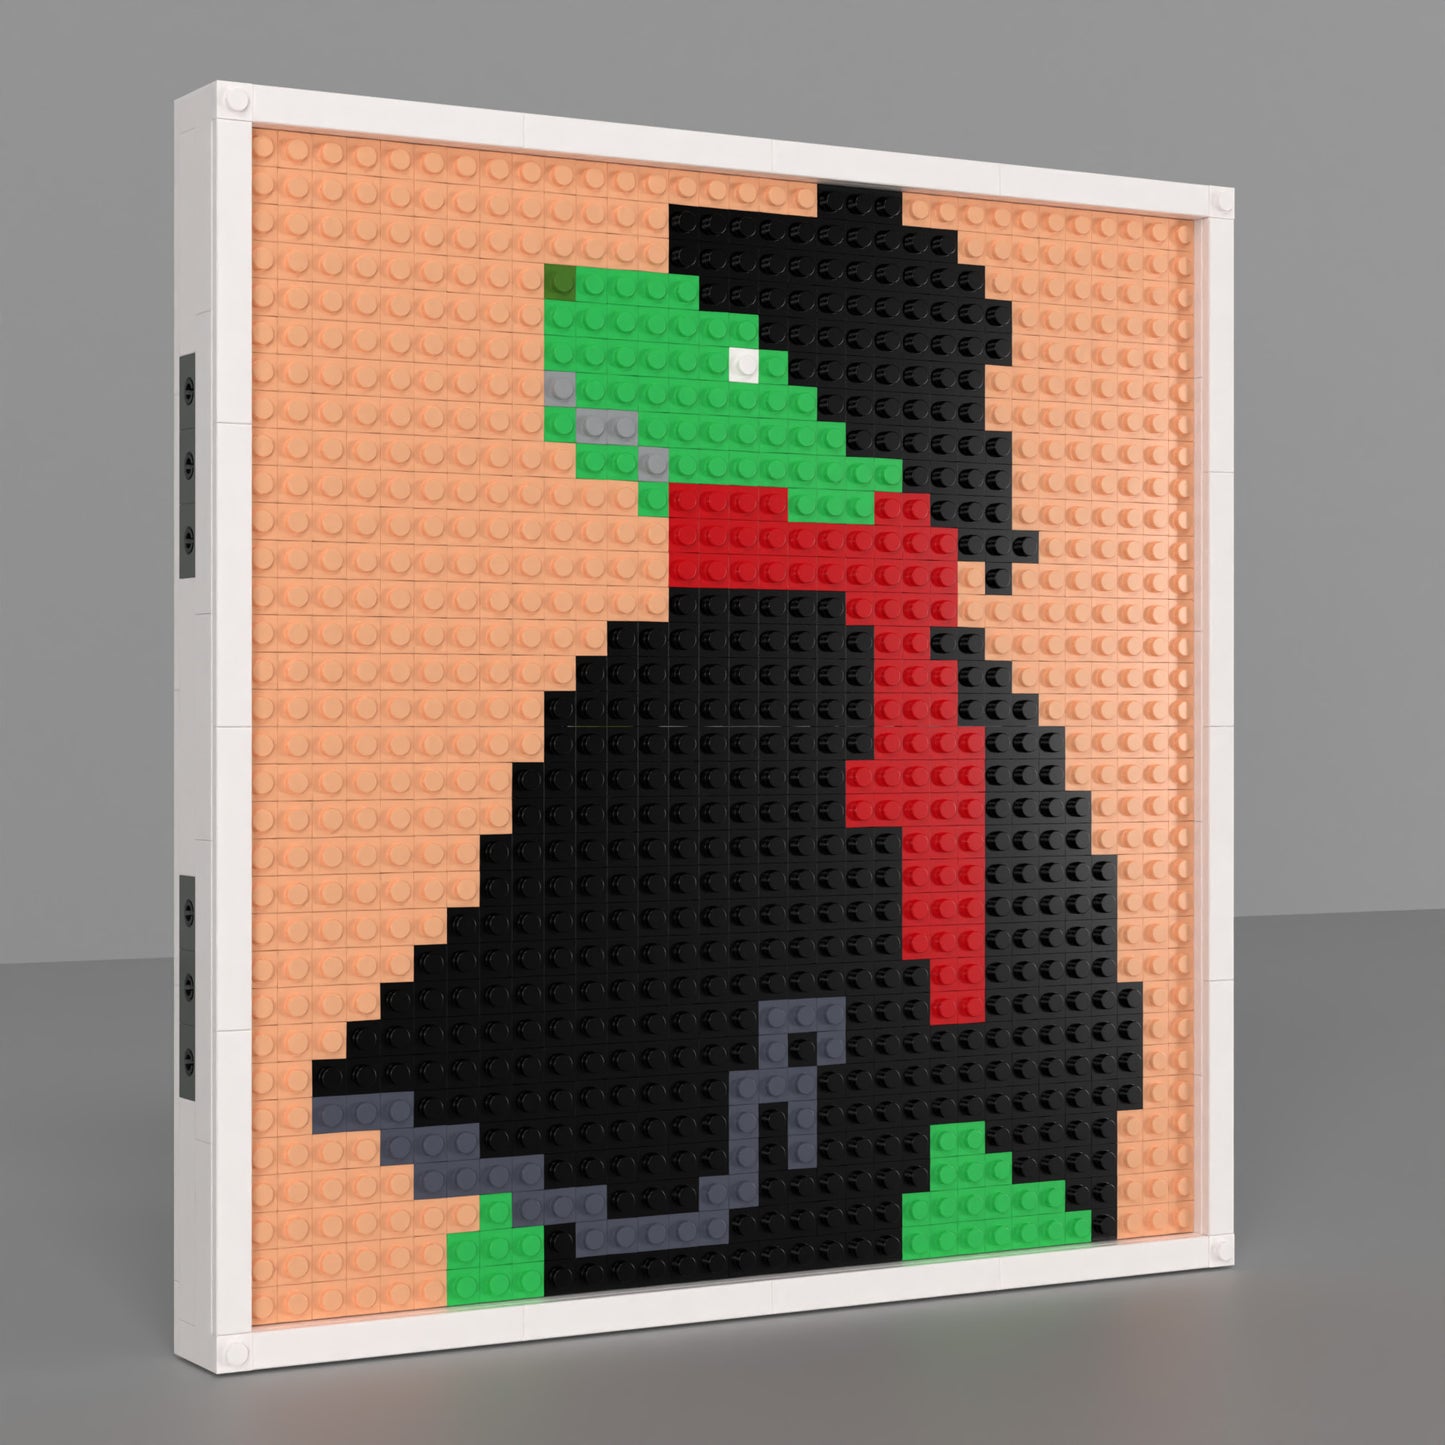 Crocodile Hero Building Brick Pixel Art - 32*32 Modular Compatible with Lego